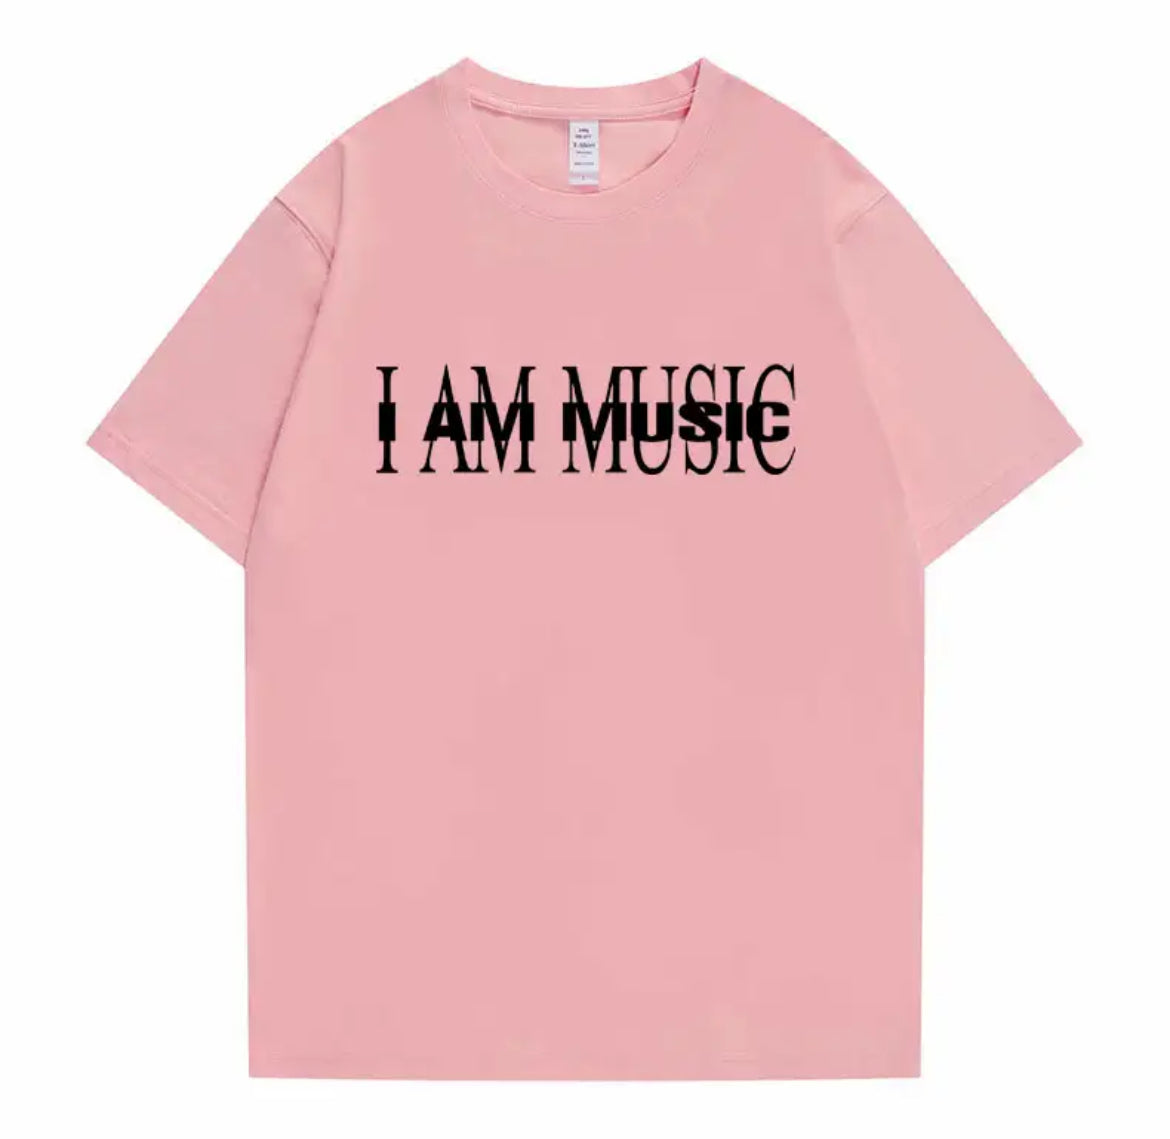 I AM MUSIC Playboi Carti T-shirt